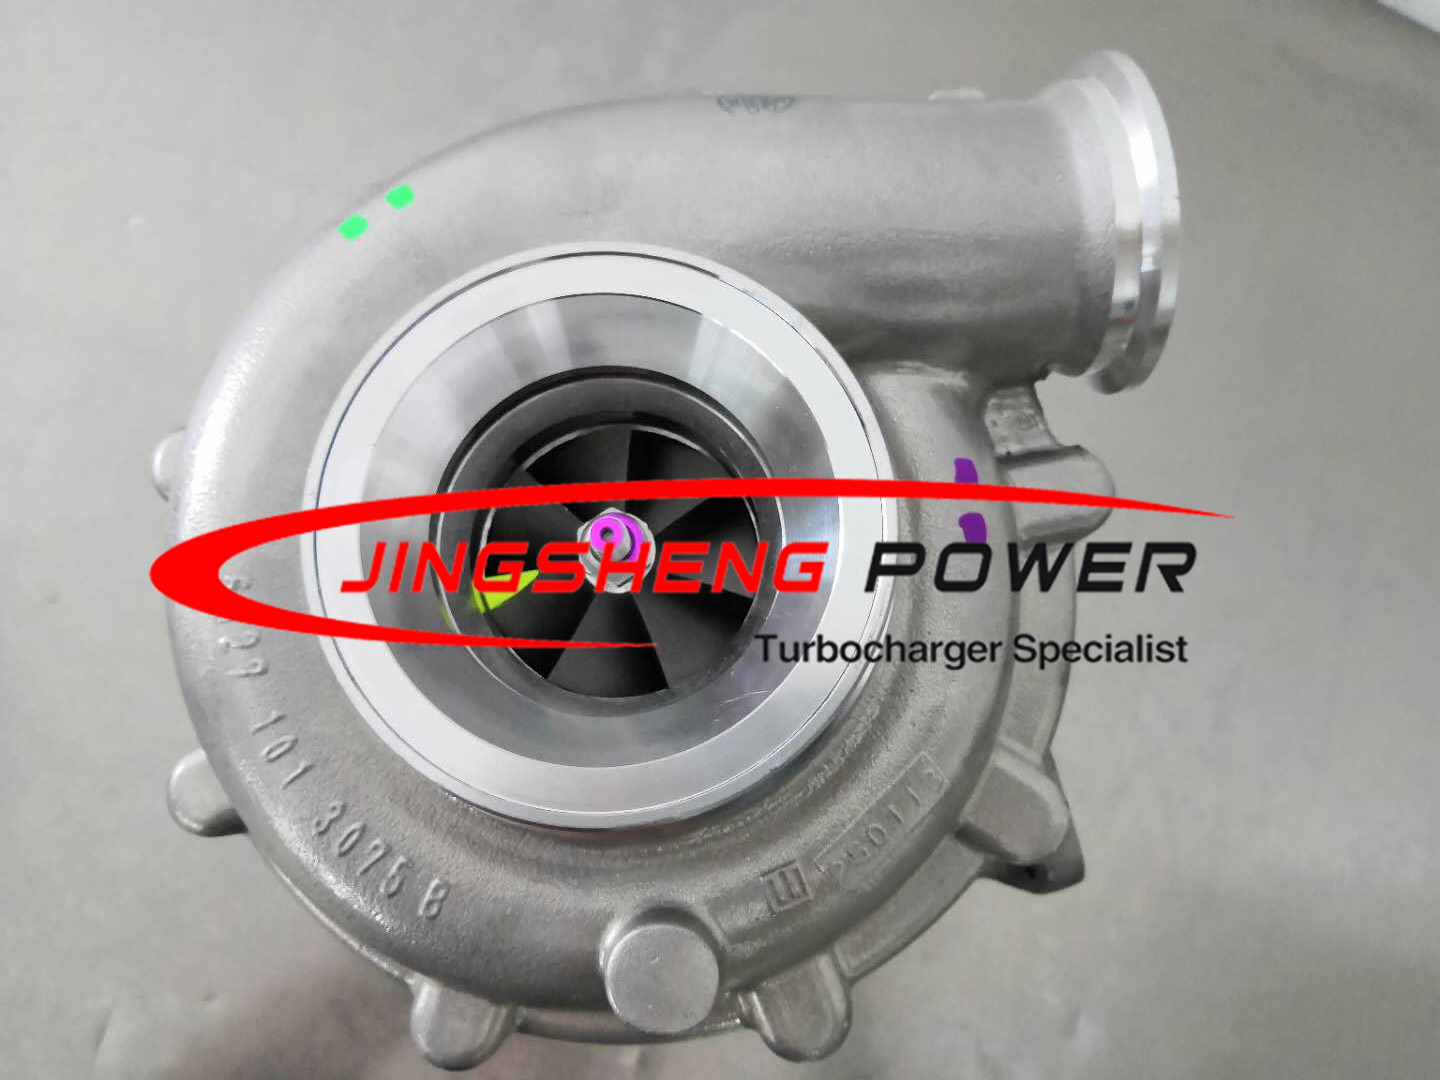 China 934 Diesel Engine Turbocharger K27.2 53279707188 10228268 For Liebherr factory